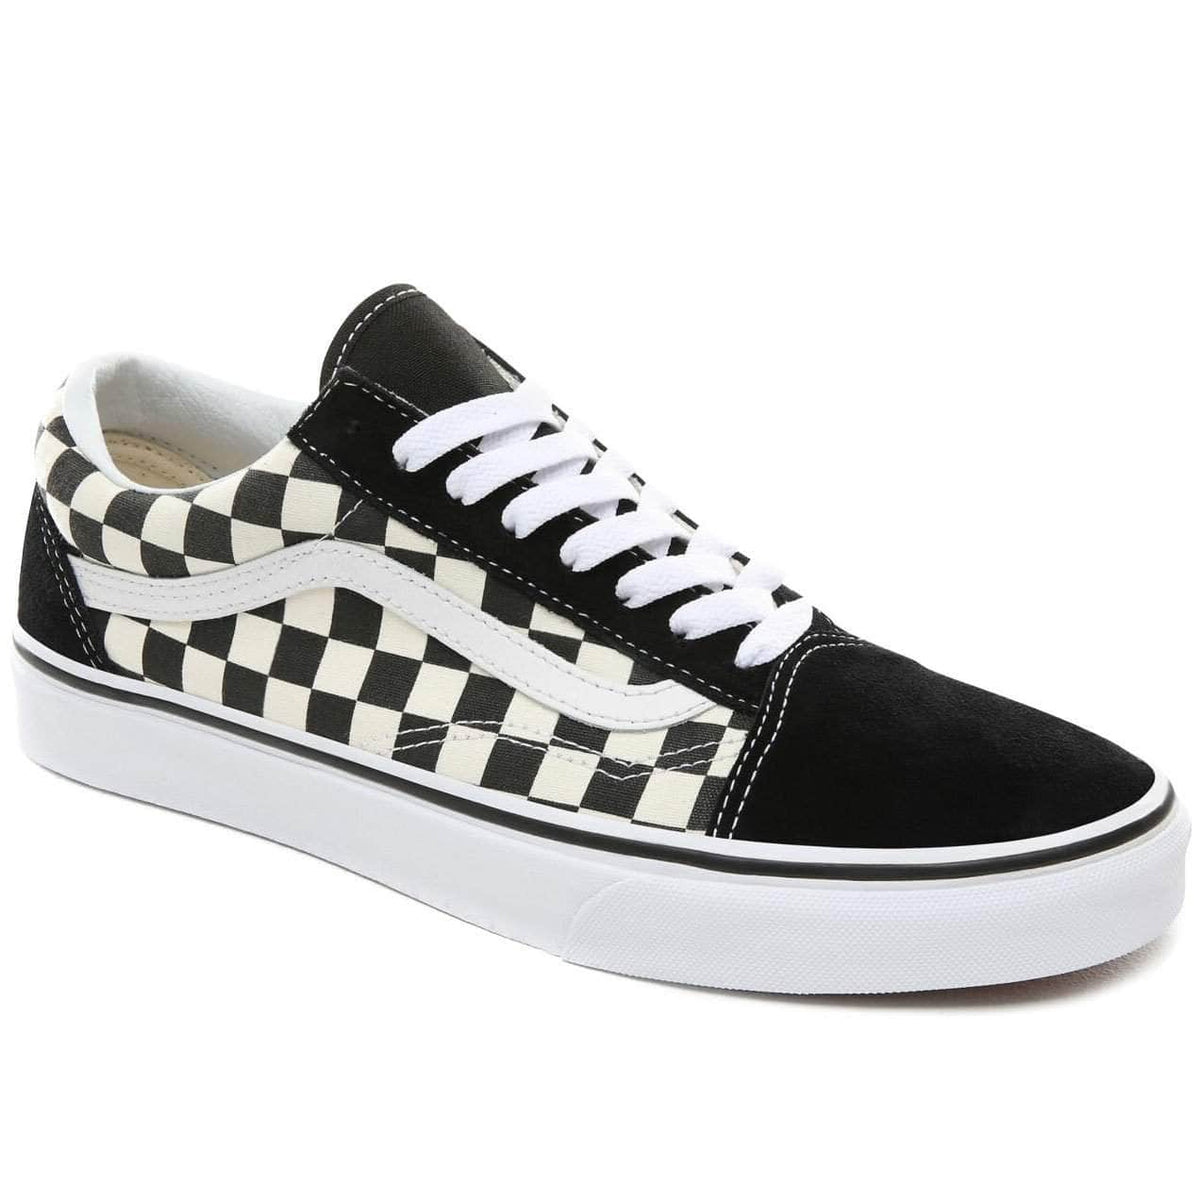 Vans Old Skool Skate Shoes - (Primary Check) Black/White - Mens Skate Shoes by Vans